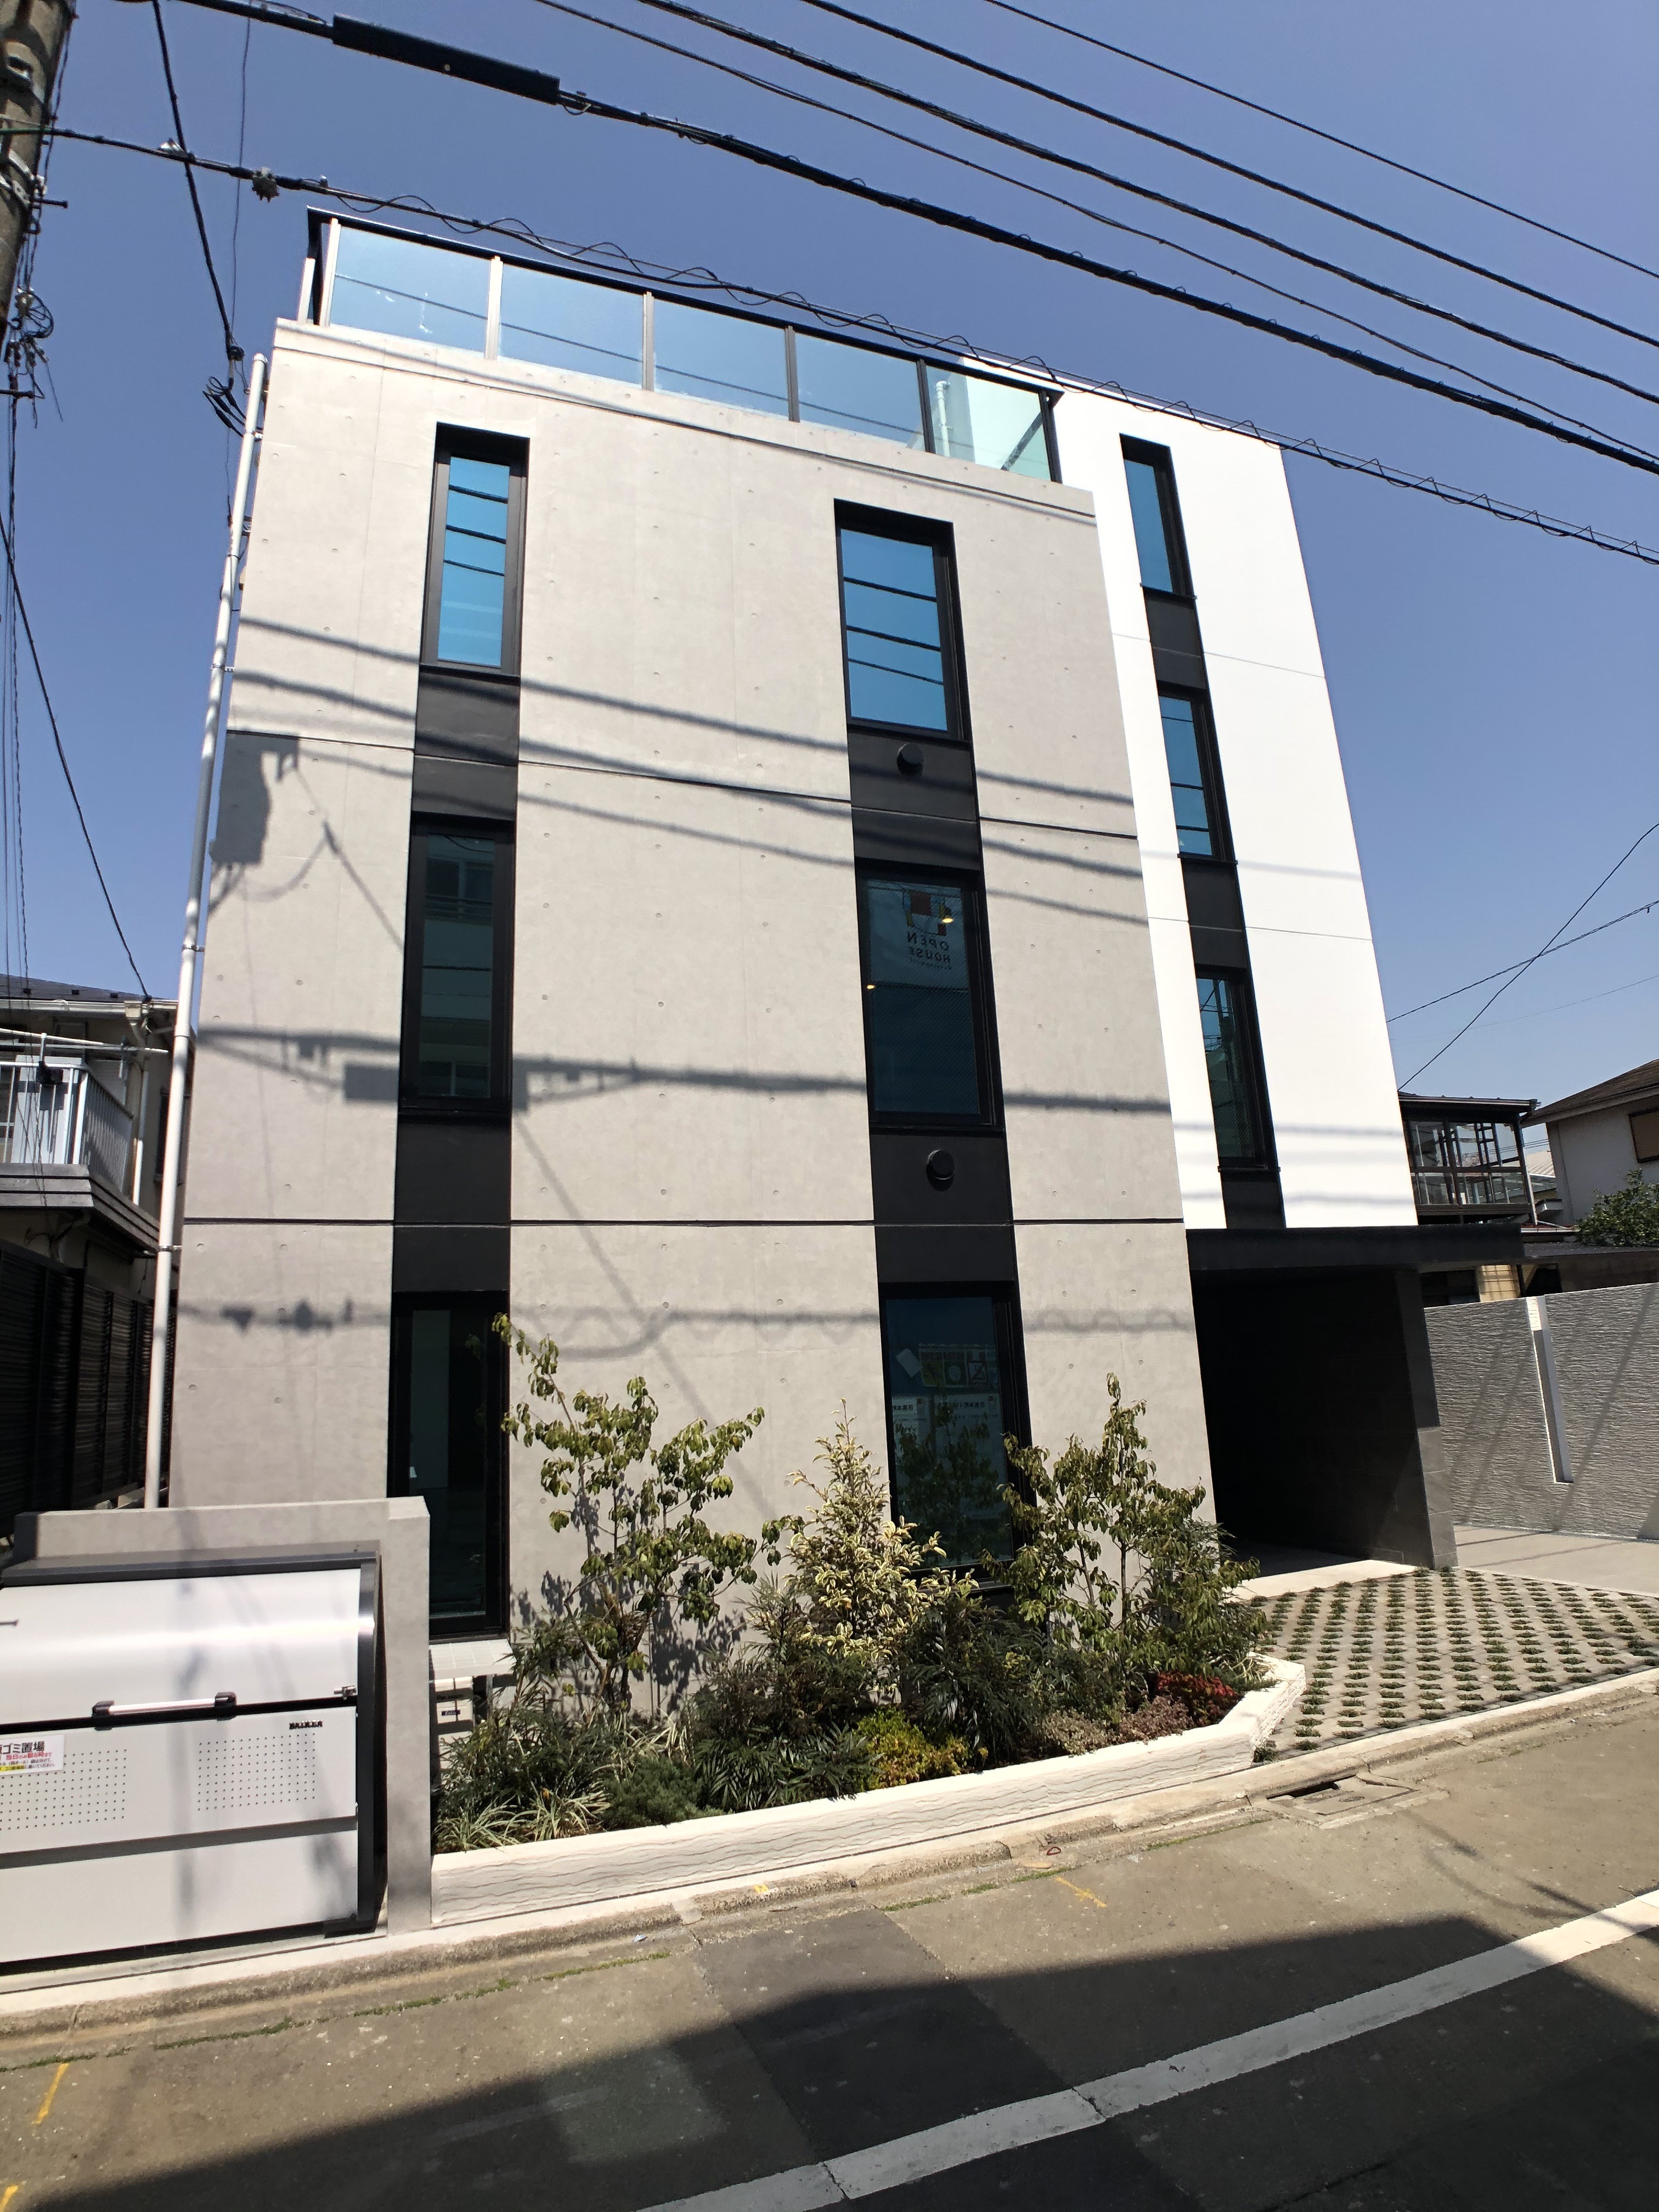 Musashi-koyama residence building